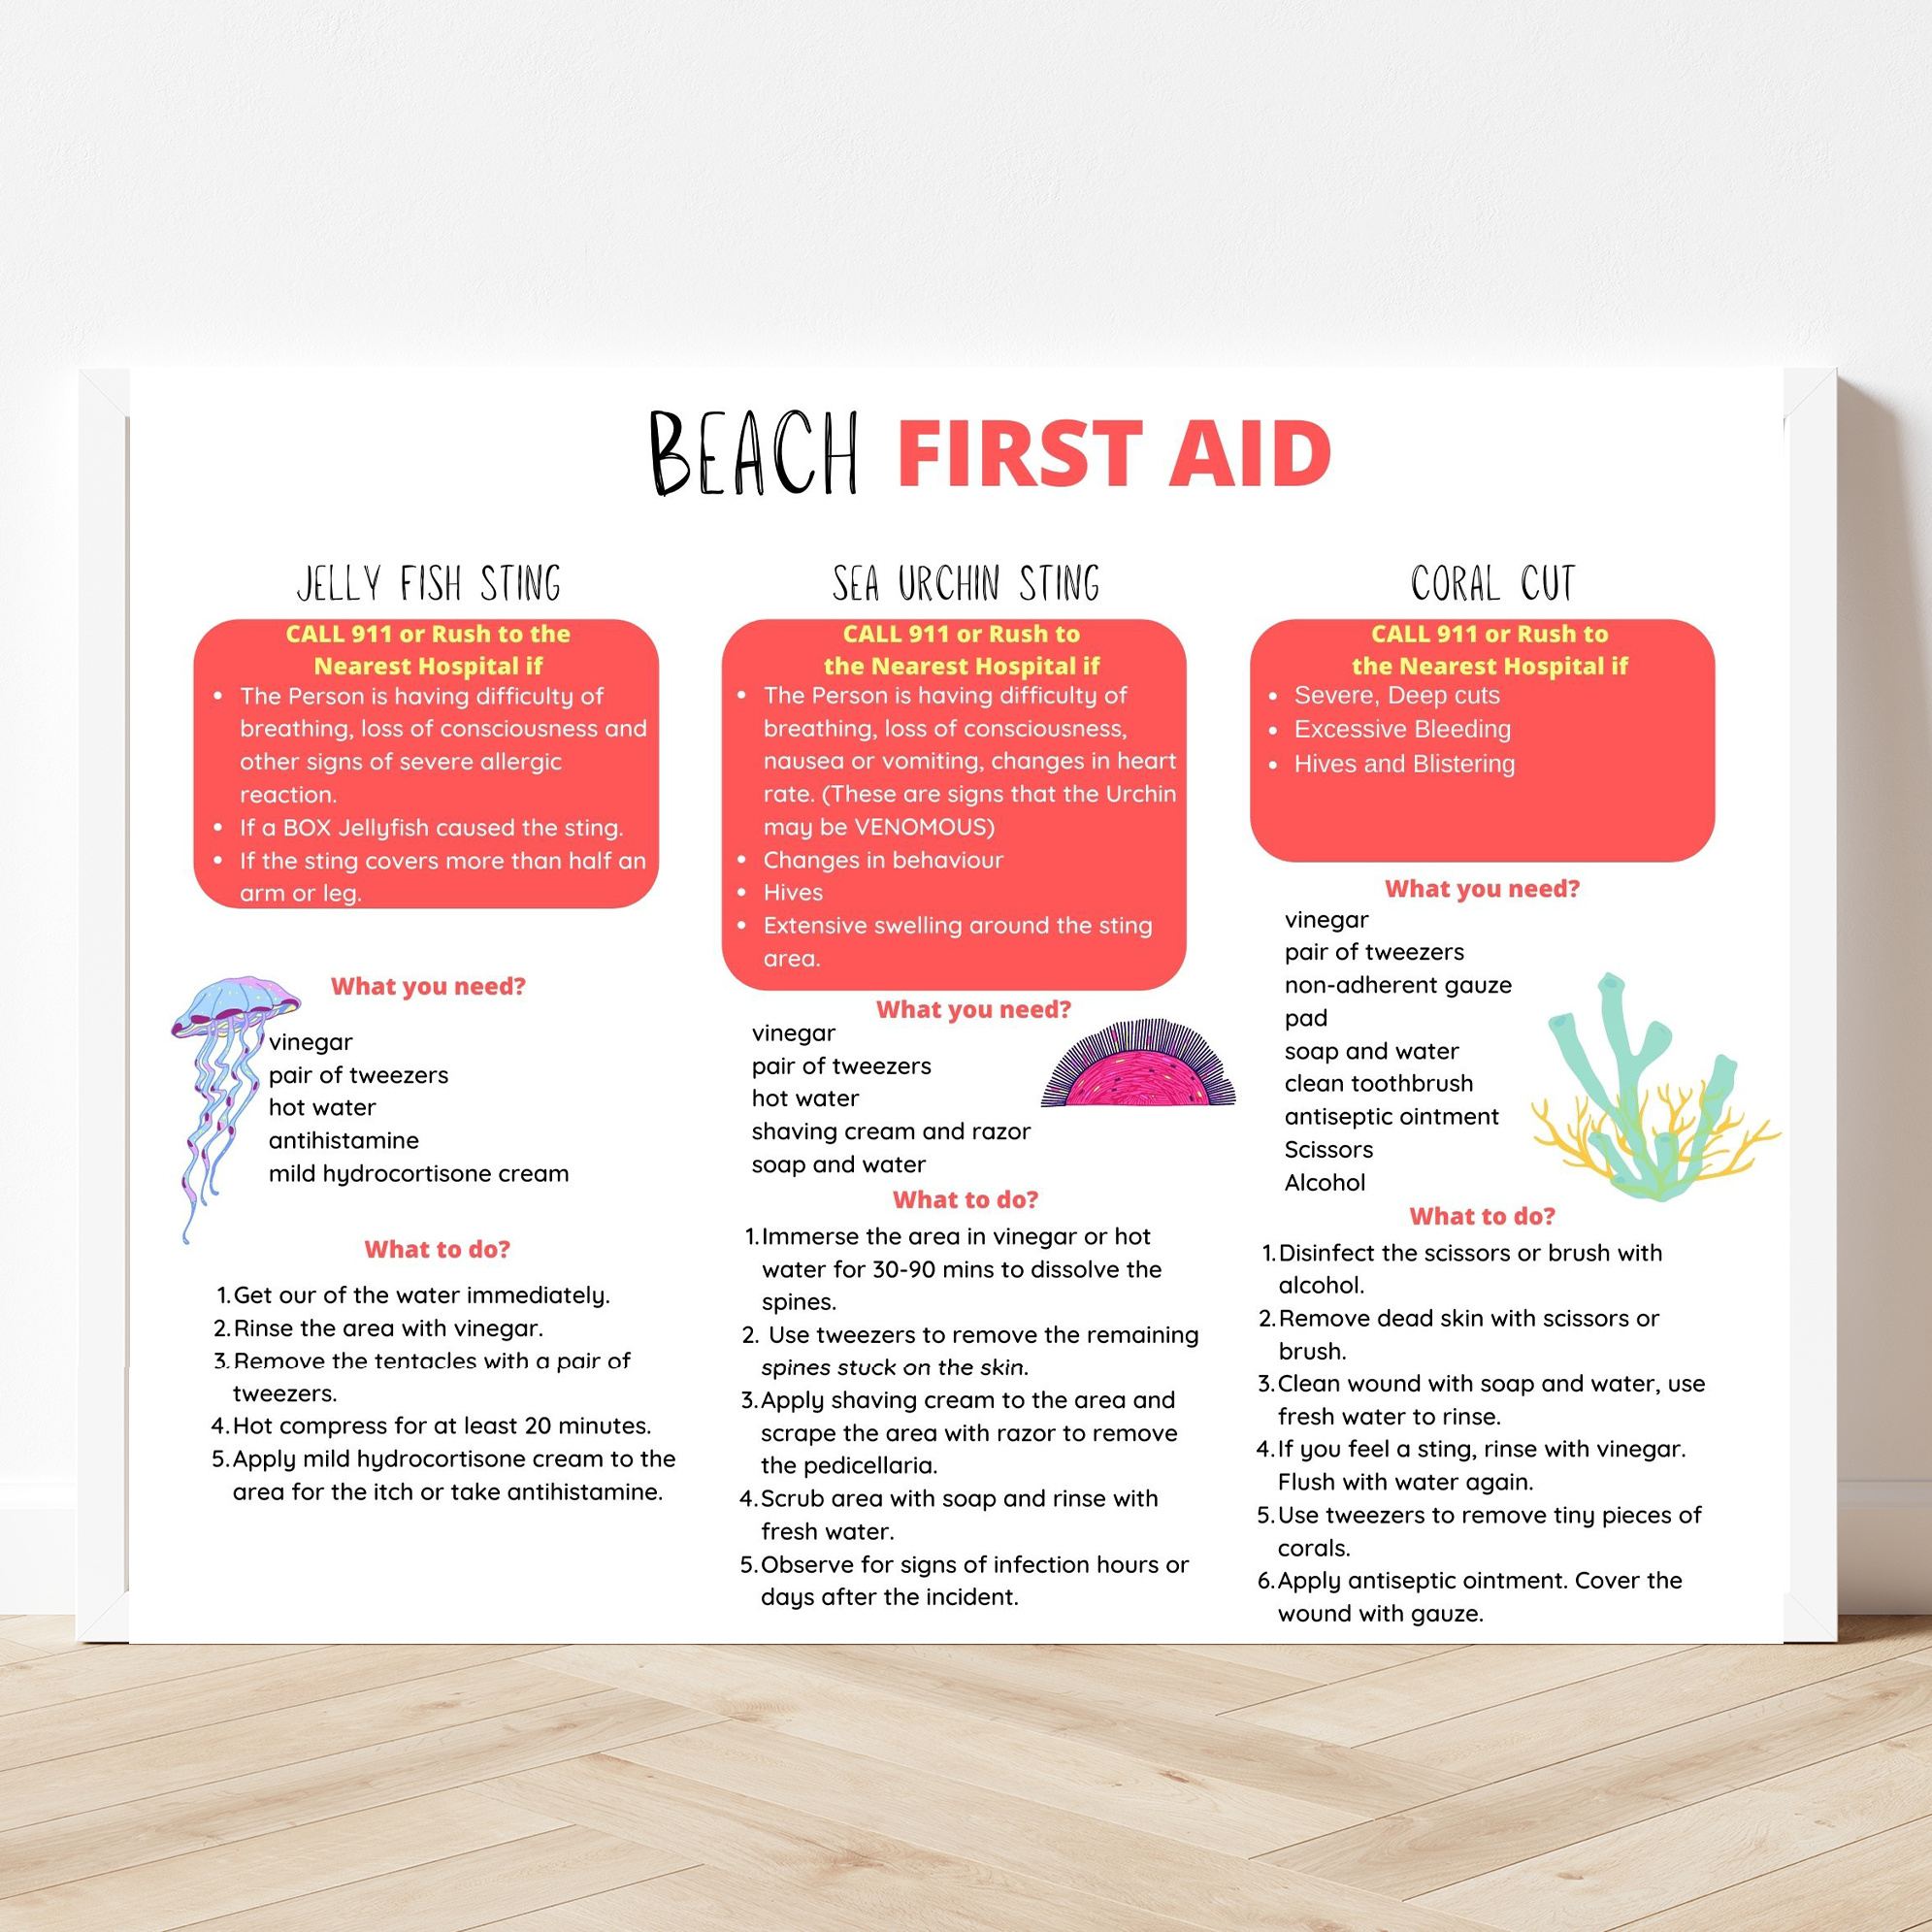 Free Printable Beach First Aid Kit